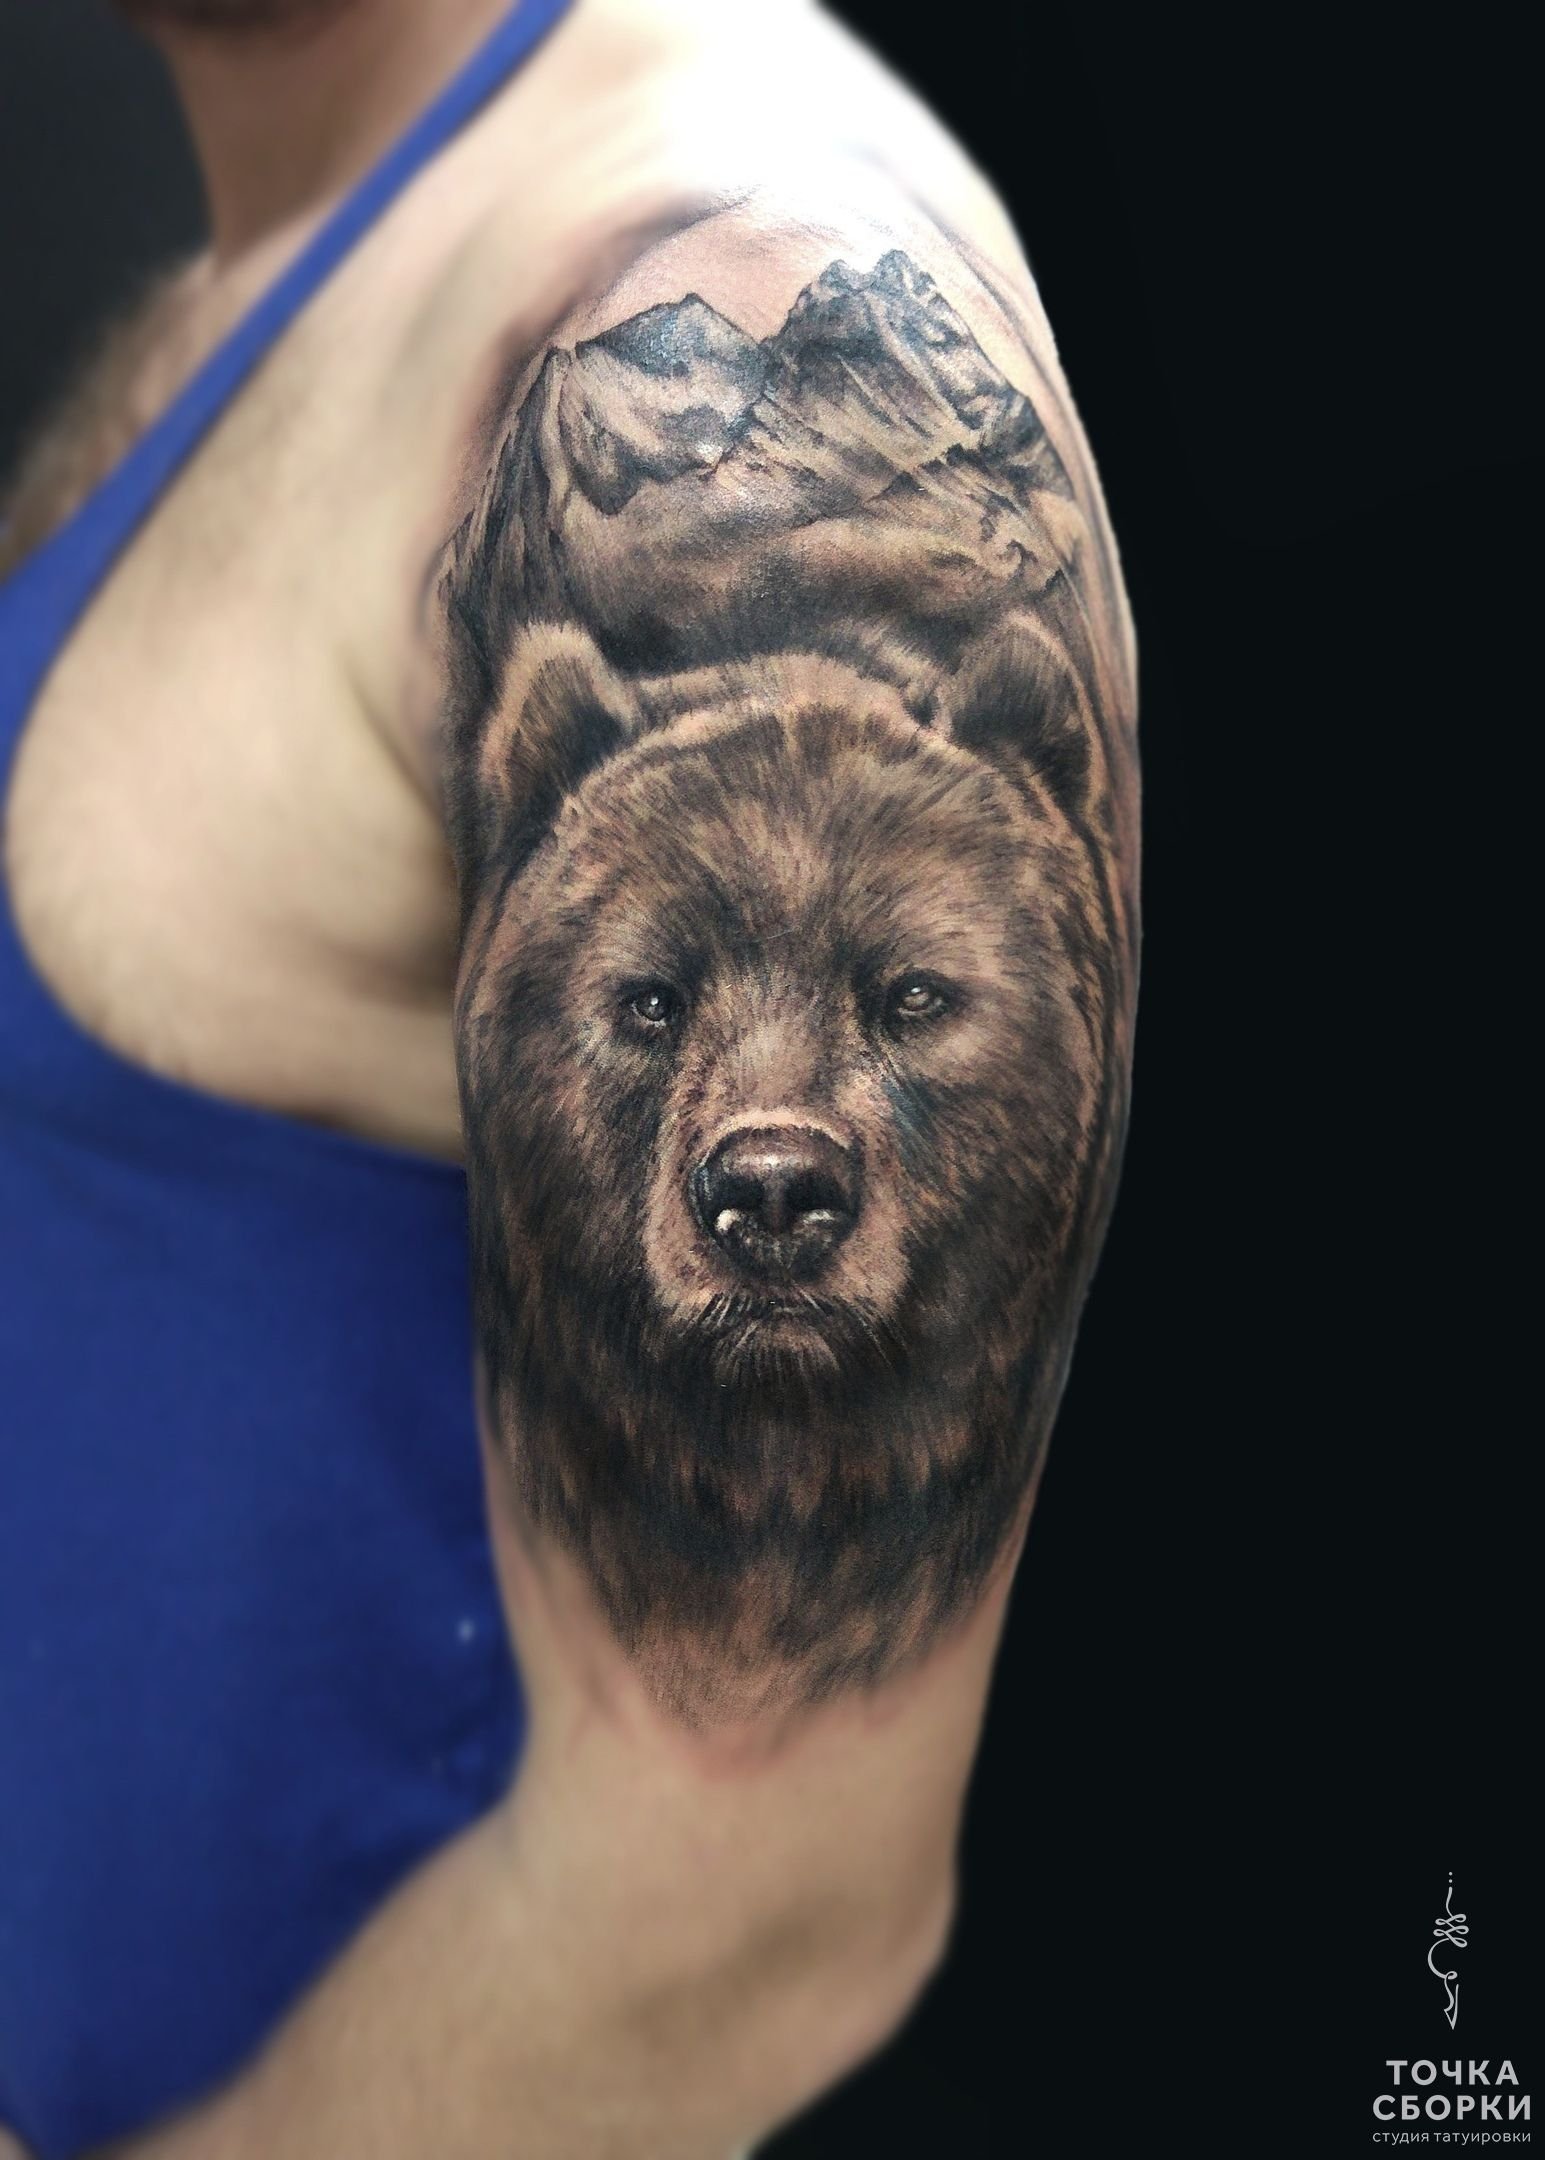 Тату на руке. Тату медведь. Тату медведь на плече. 100+ татуировок и эскизов на сайте!